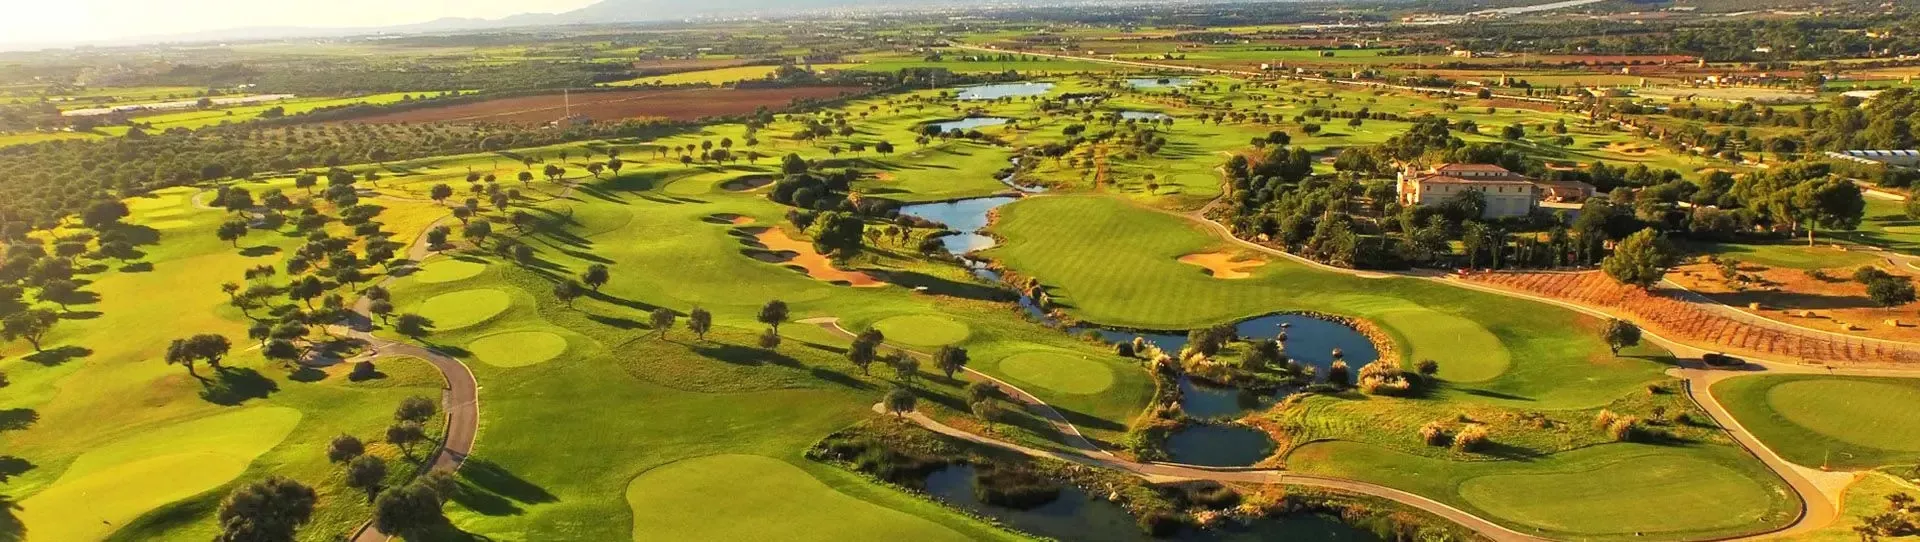 Spain golf courses - Son Gual Golf Course - Photo 3